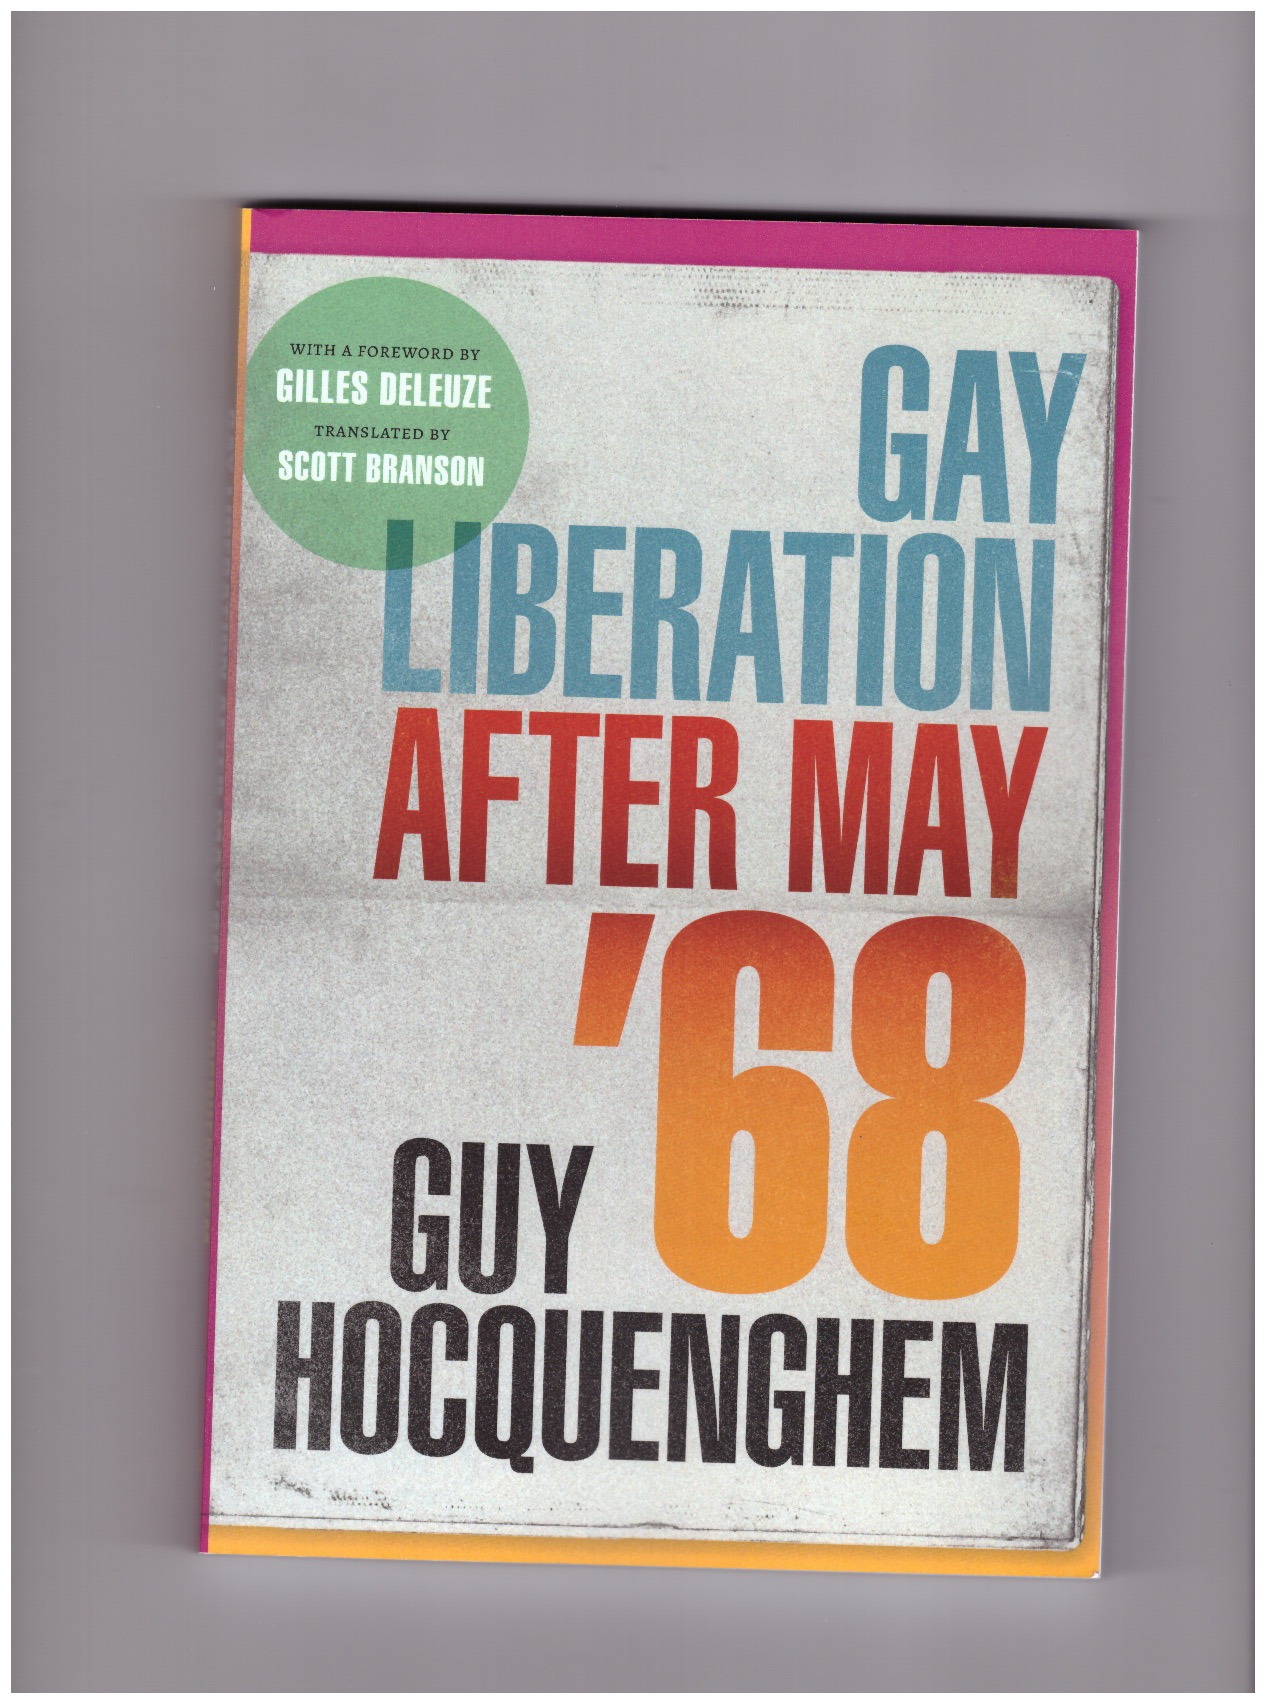 HOCQUENGHEM, Guy - Gay Liberation after May '68